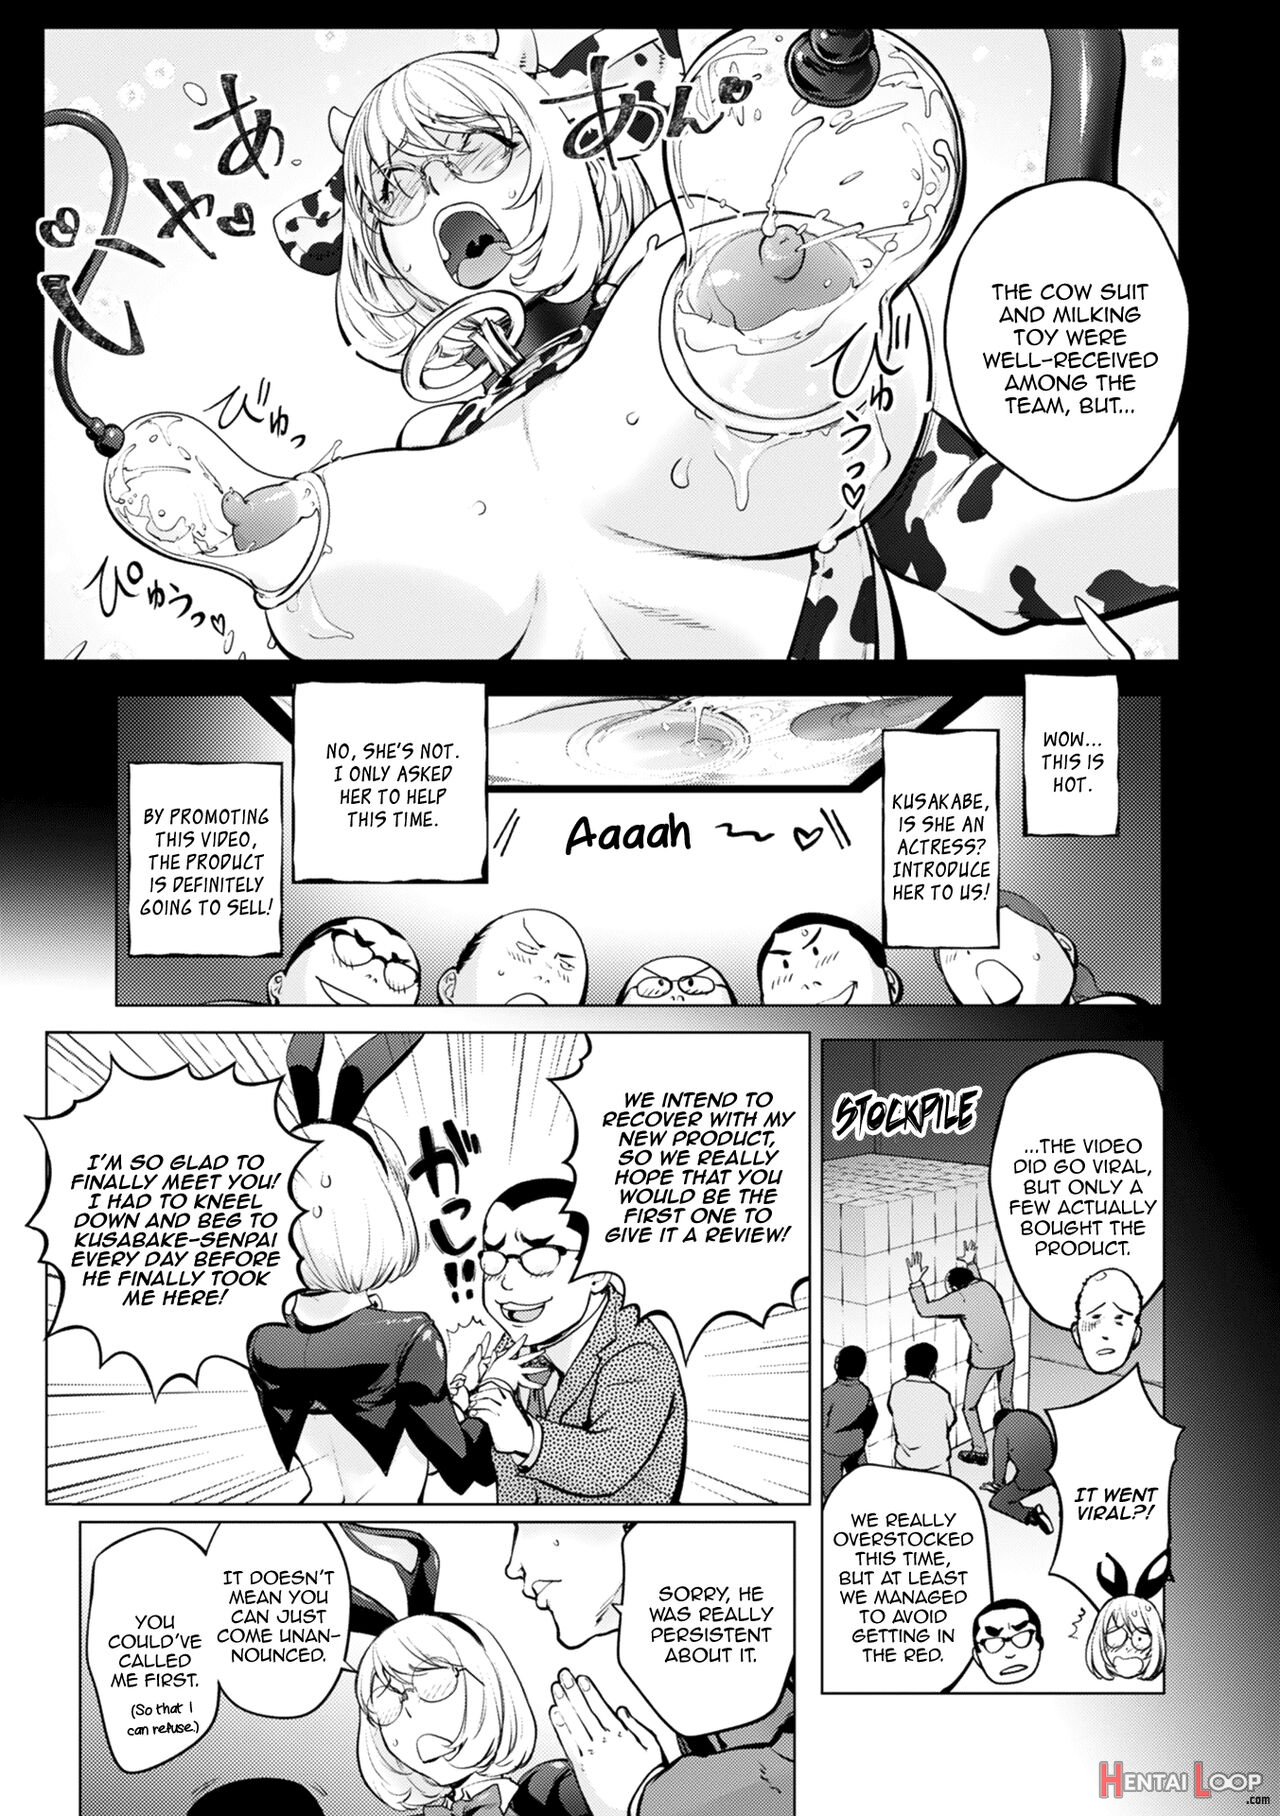 Milking Kaya Bunny Arc page 3